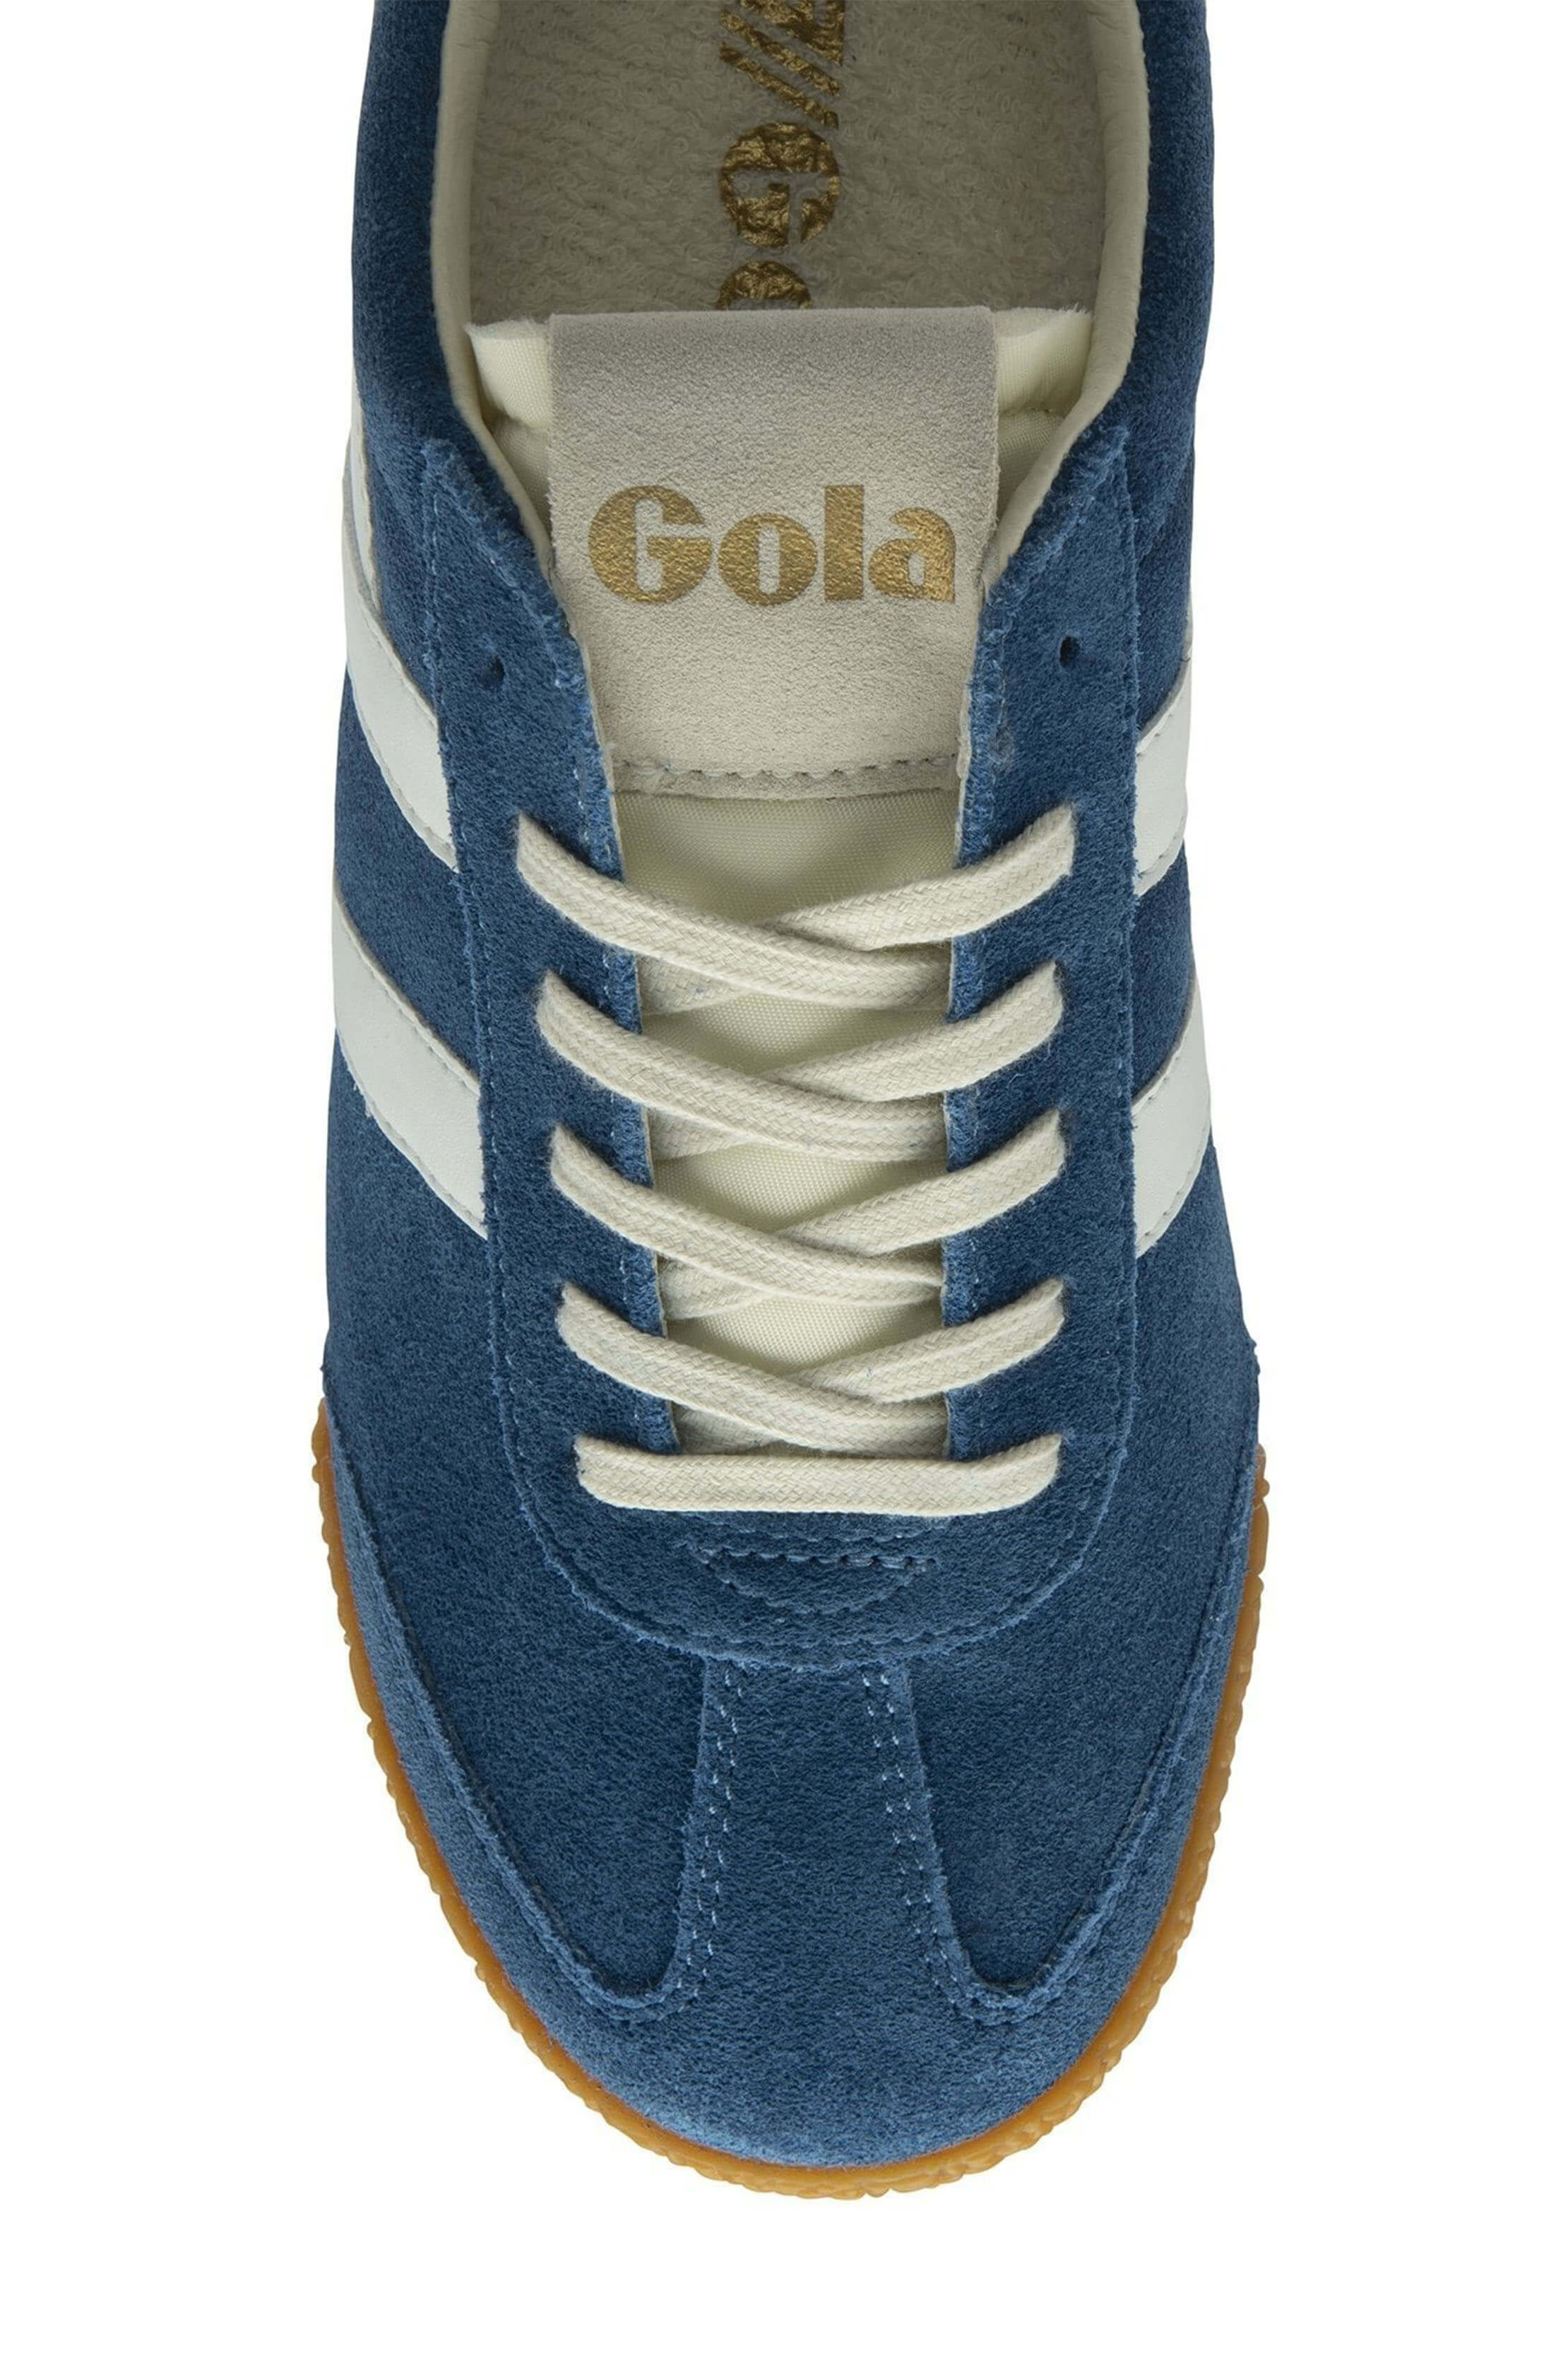 Gola elan sneaker in marine blue